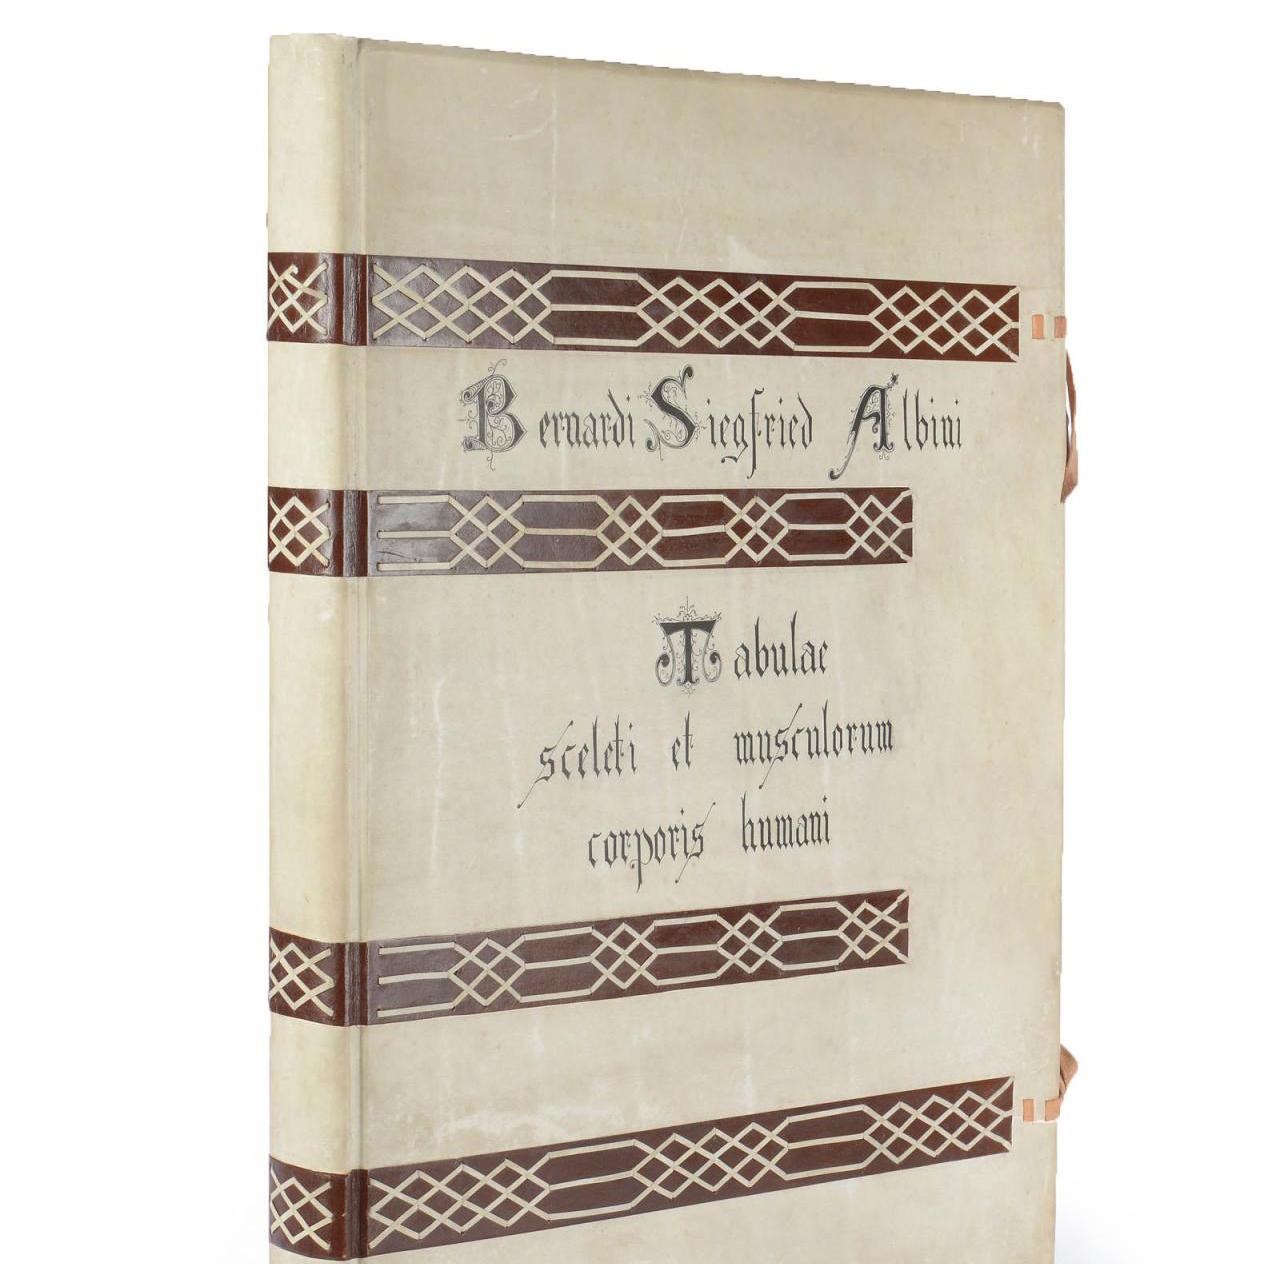 Albinus and the Art of the Book - Pre-sale